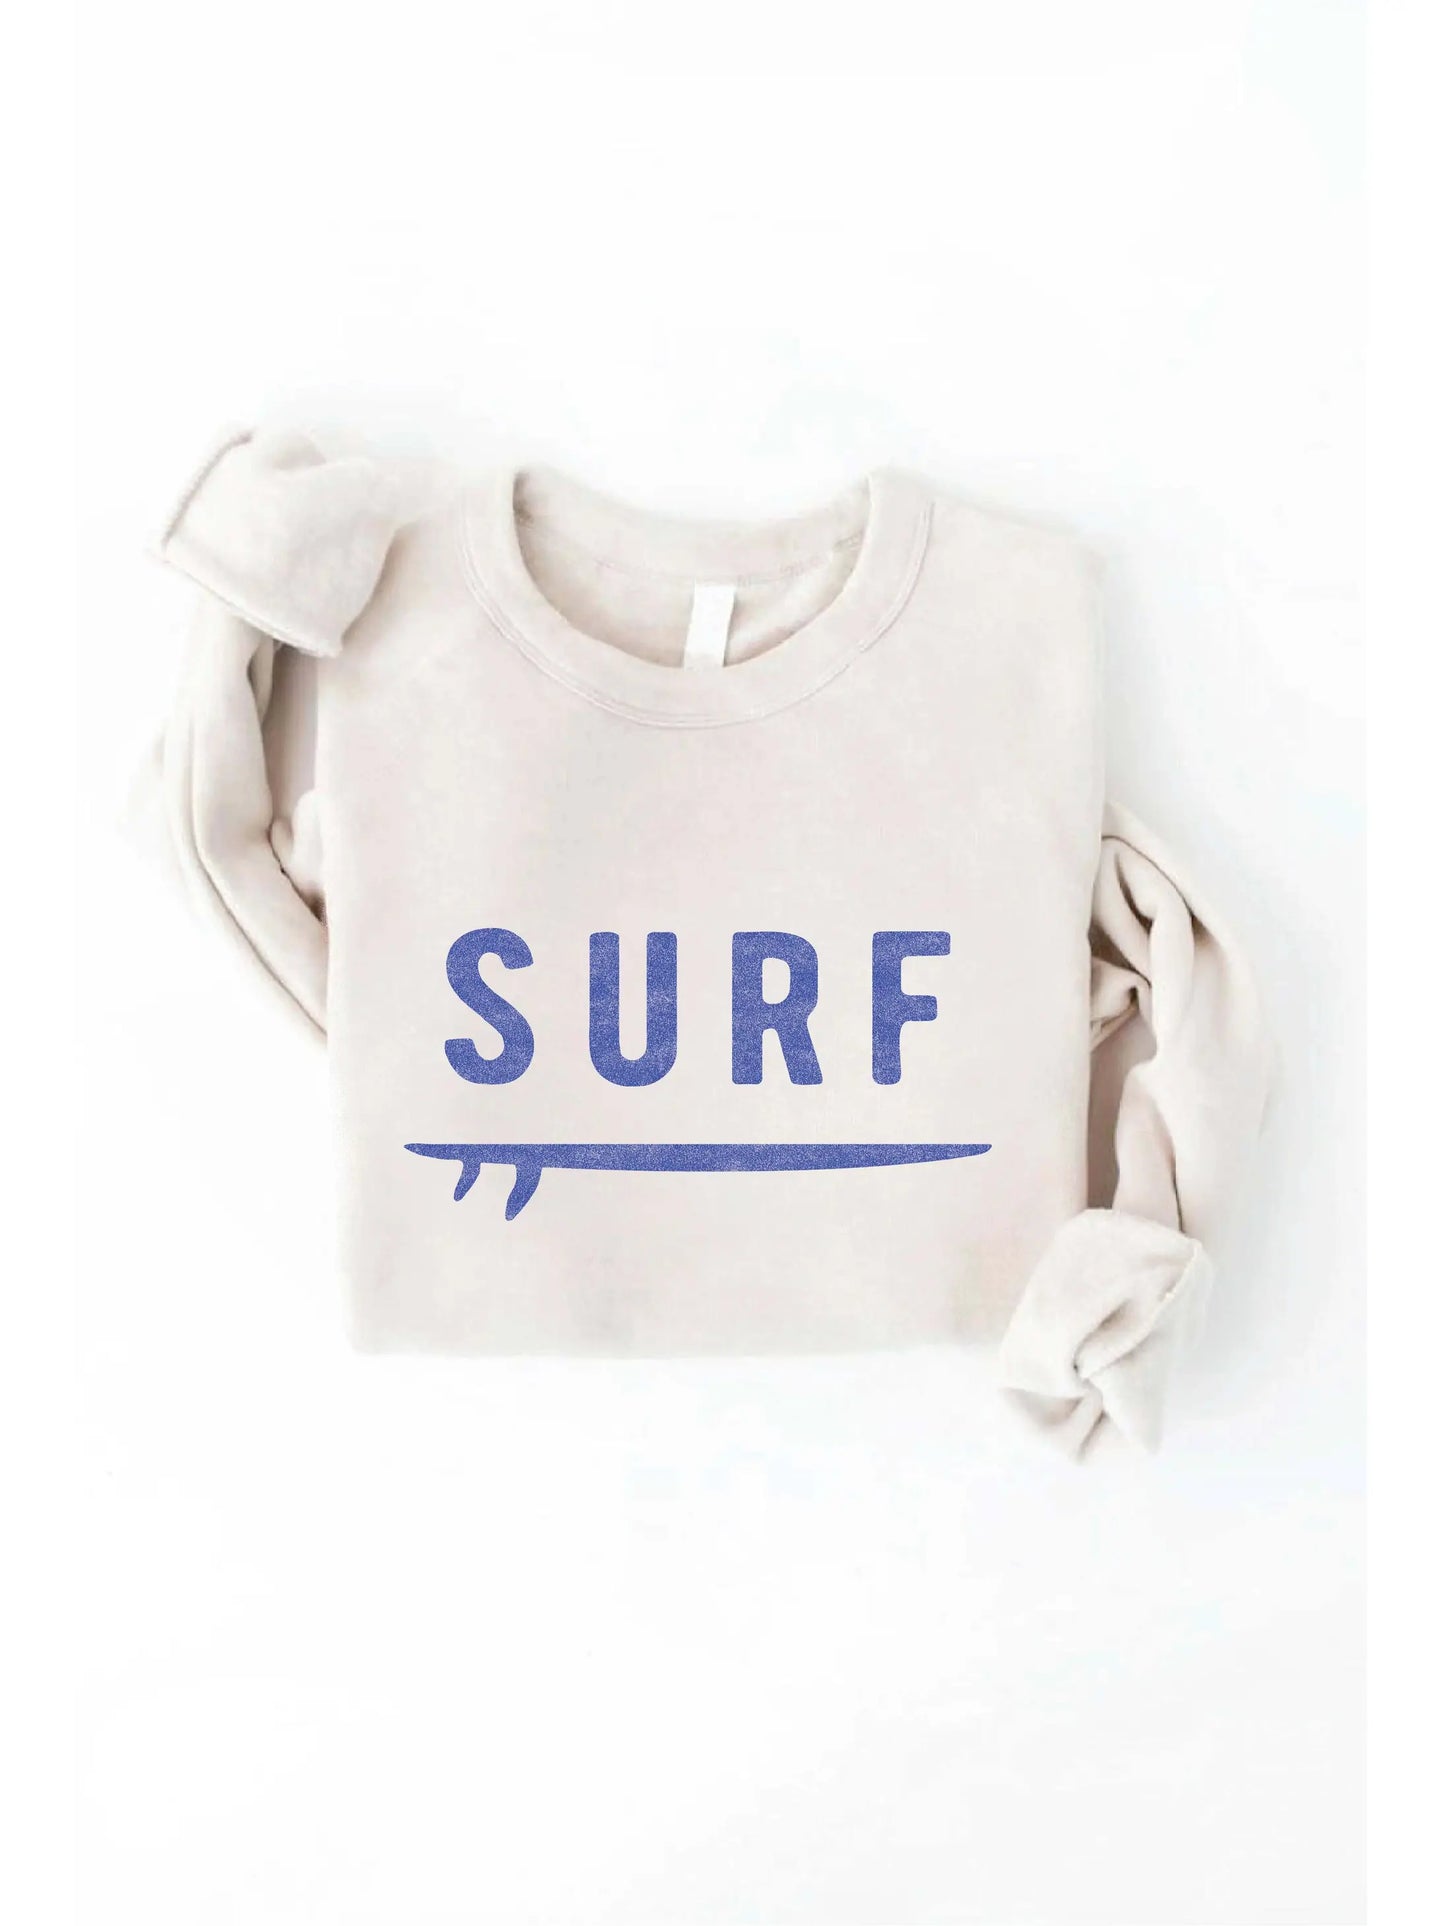 Surf Sweatshirt (3 colors)